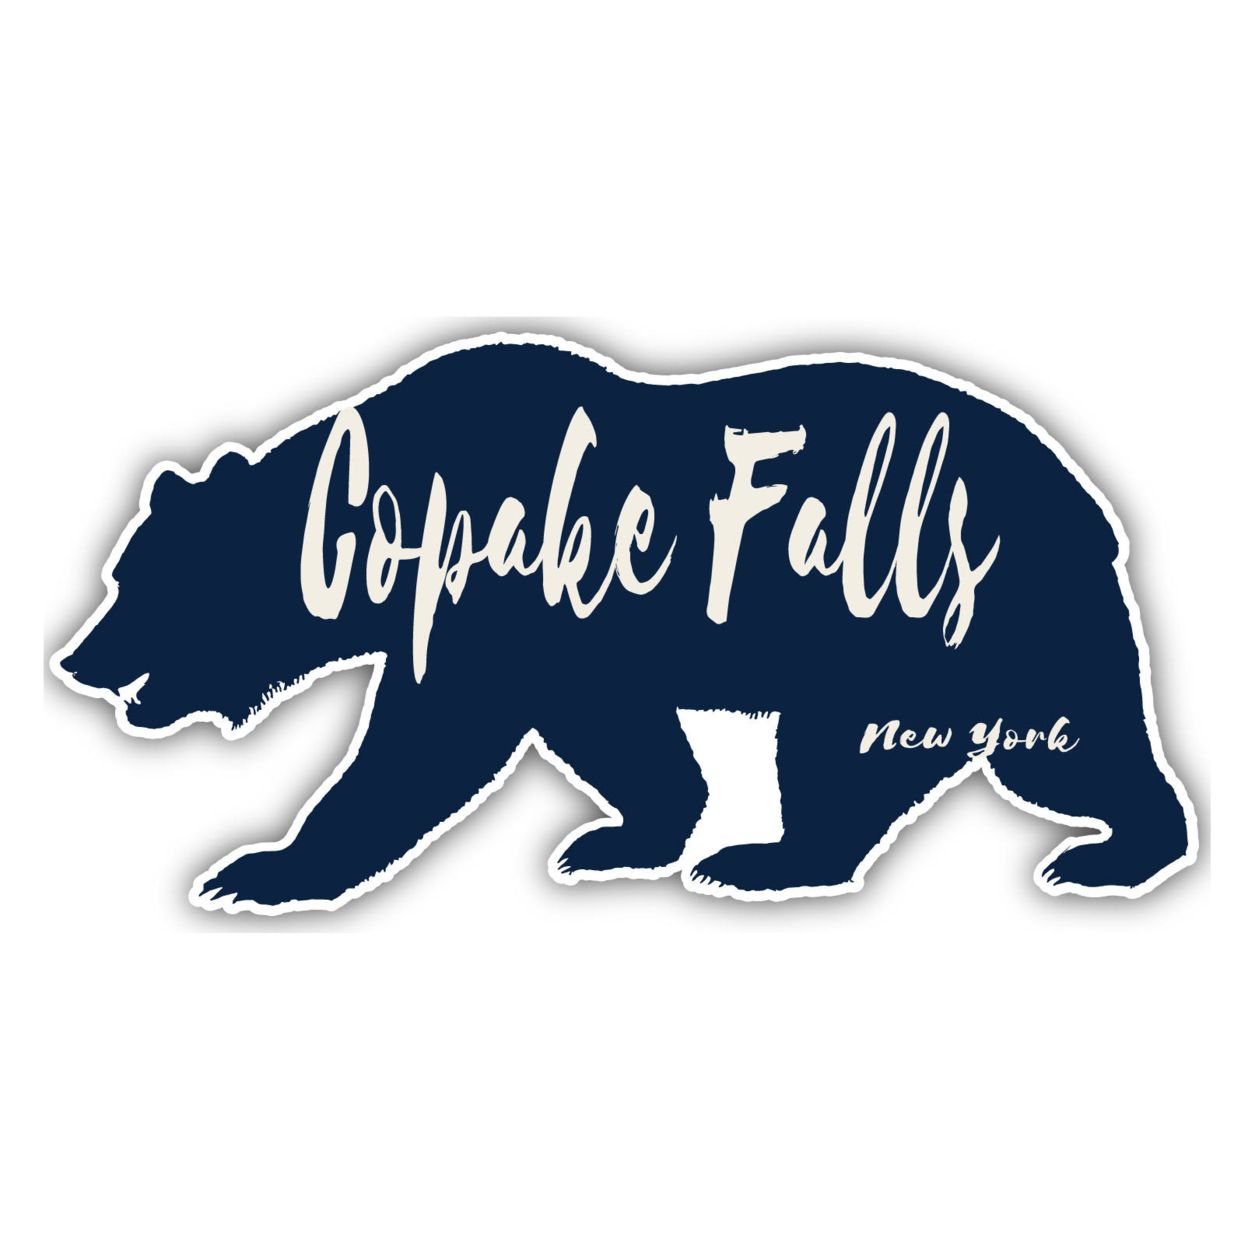 Copake Falls New York Souvenir Decorative Stickers (Choose Theme And Size) - Single Unit, 12-Inch, Bear